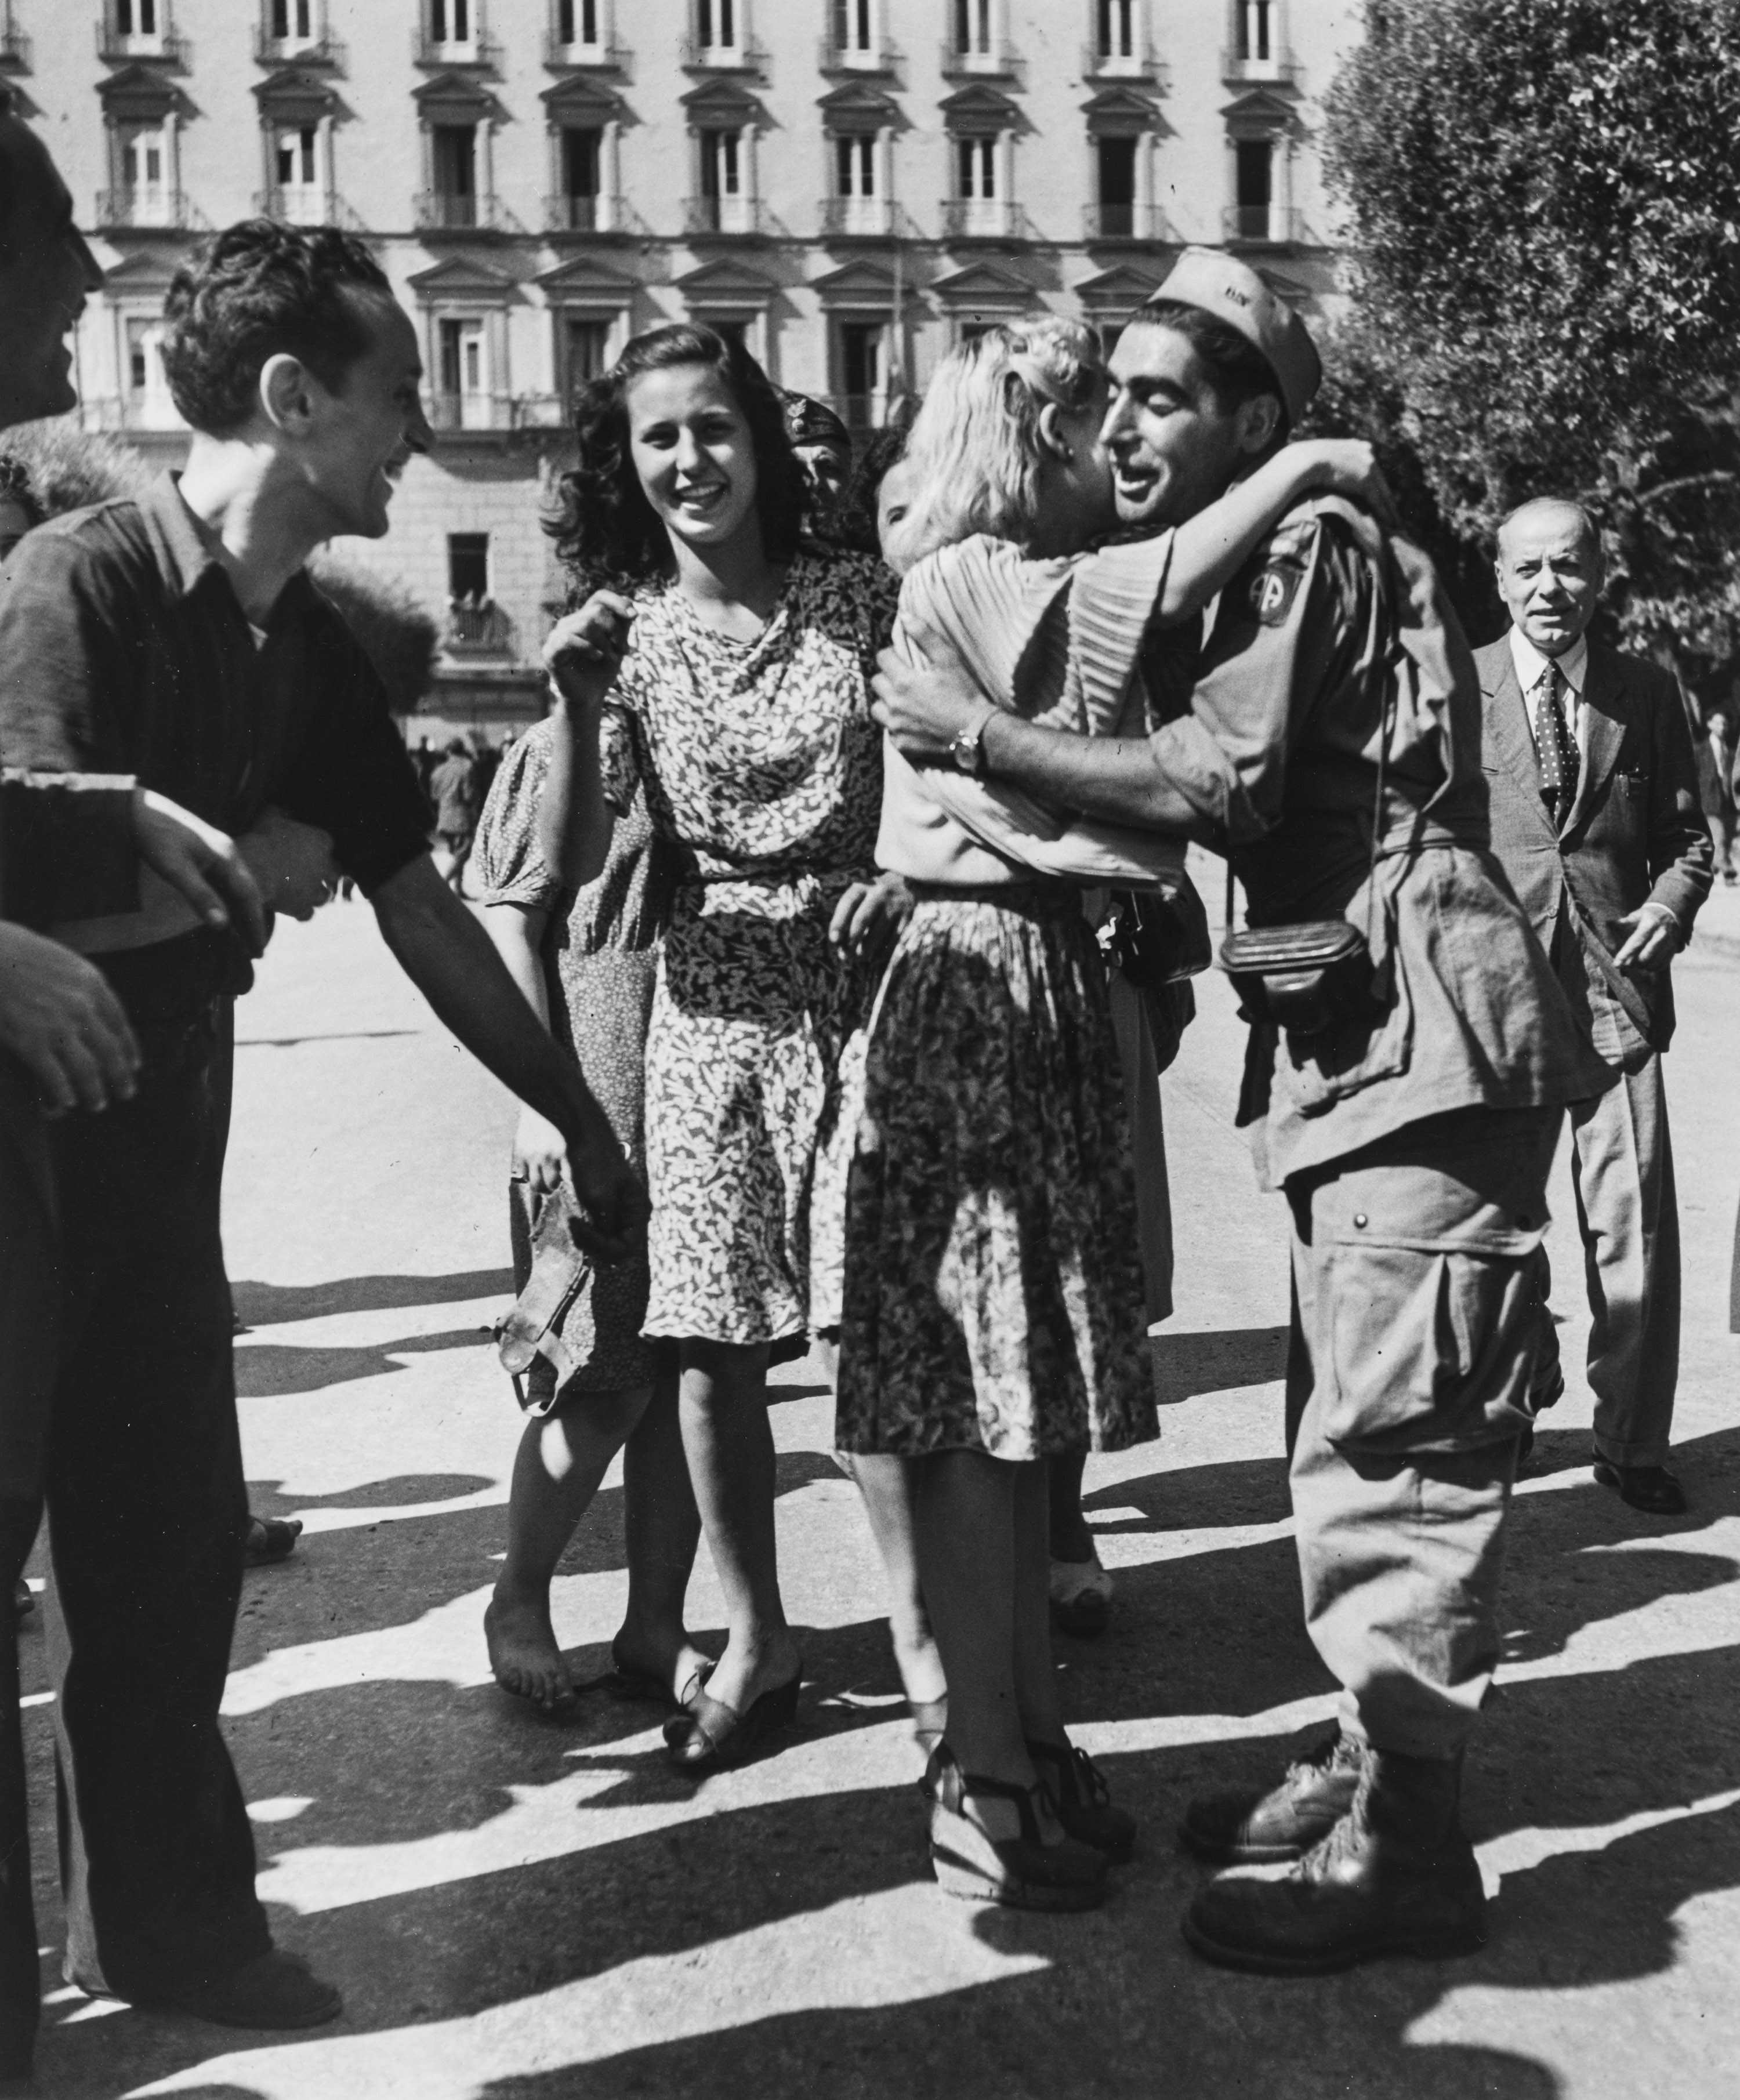 Guerra civile spagnola by Robert Capa, 1936